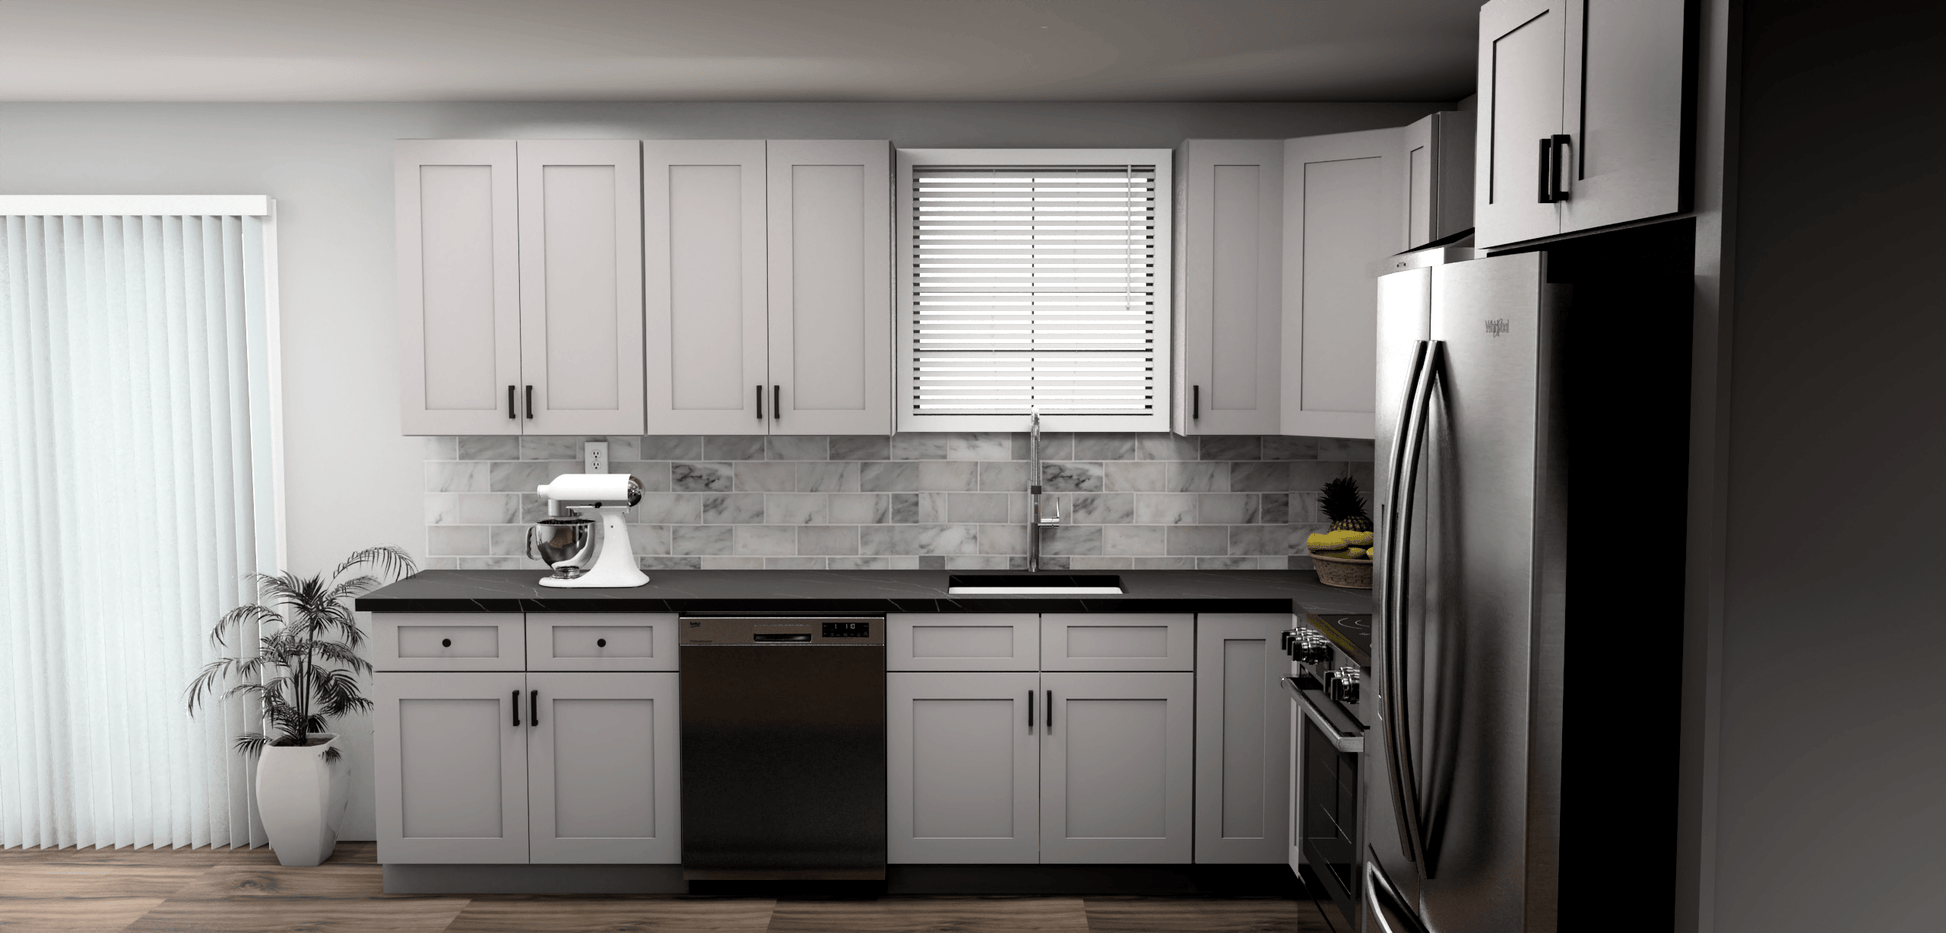 Fabuwood Allure Galaxy Nickel 11 x 11 L Shaped Kitchen Side Layout Photo